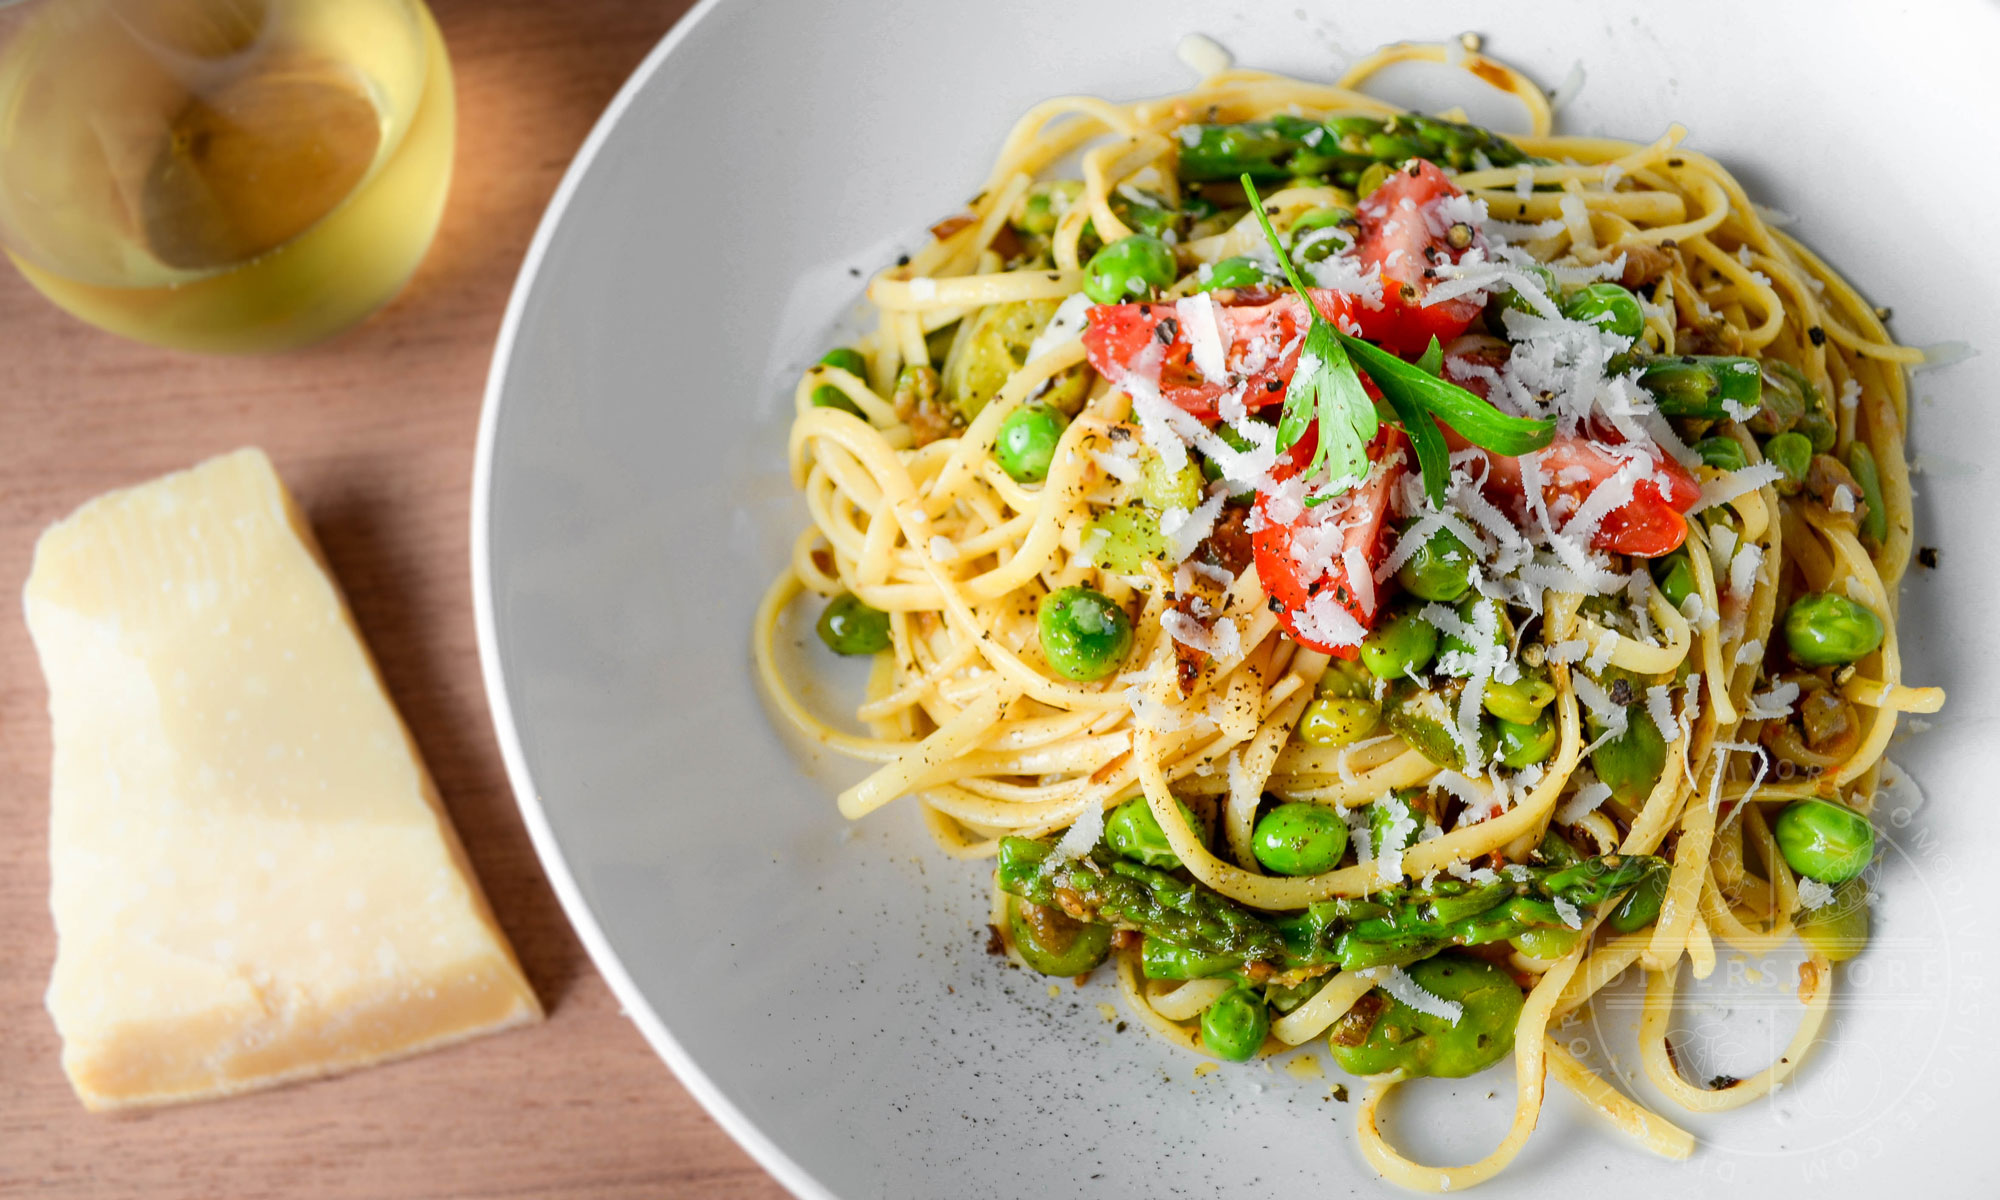 Linguine Primavera - pasta with spring vegetables (fava beans, peas, and asparagus tips)